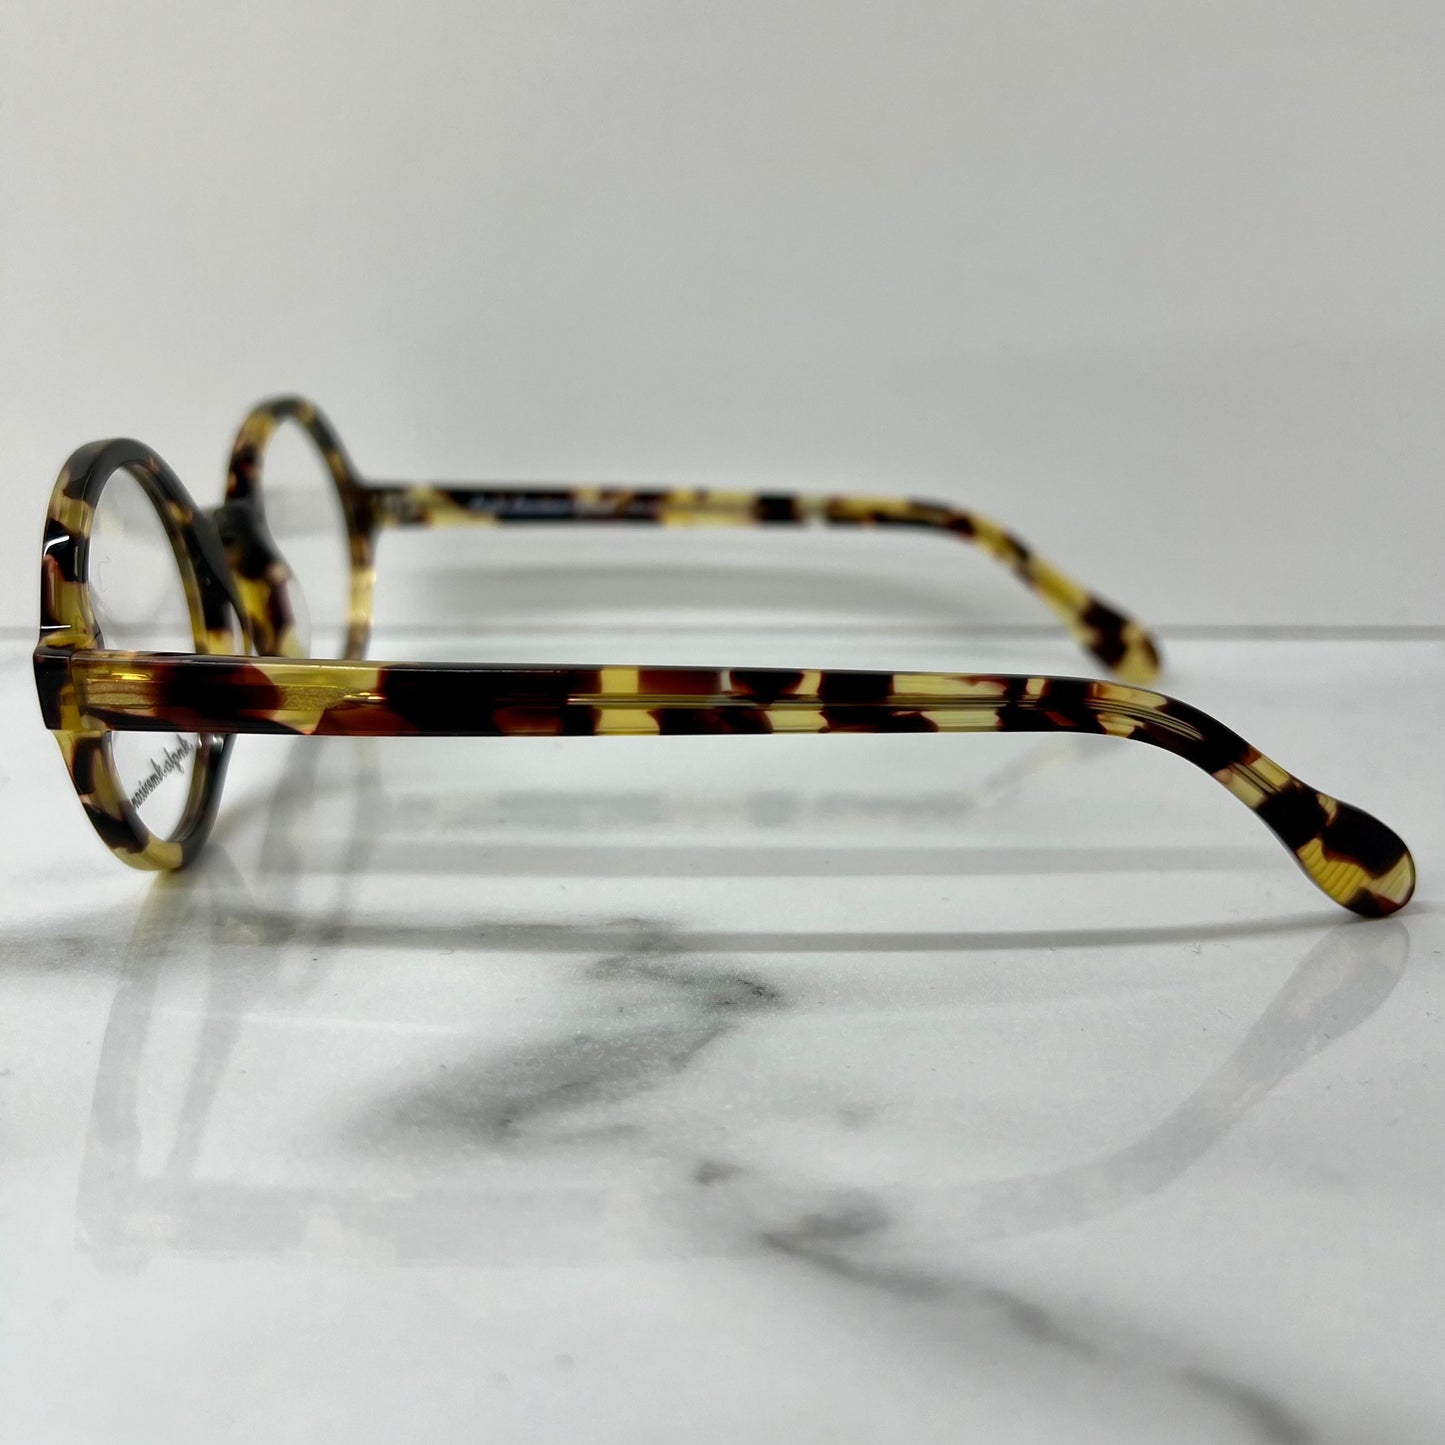 Anglo American 221 Optical Glasses Tortoise Shell England Designer Eyeglasses